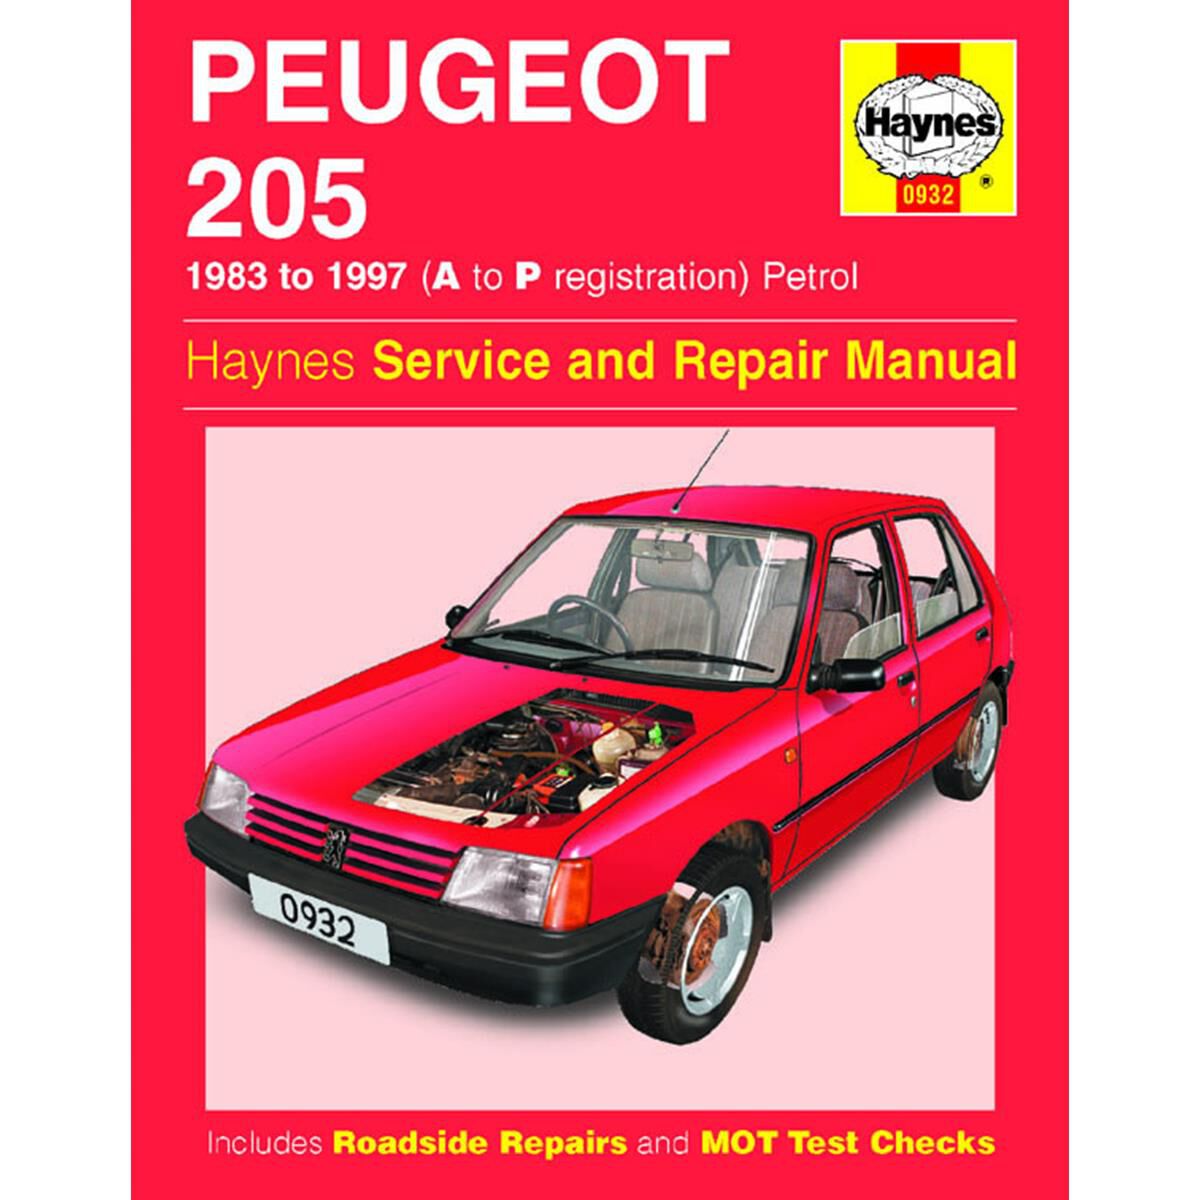 Peugeot 205 (1983 - 1997) used car review, Car review